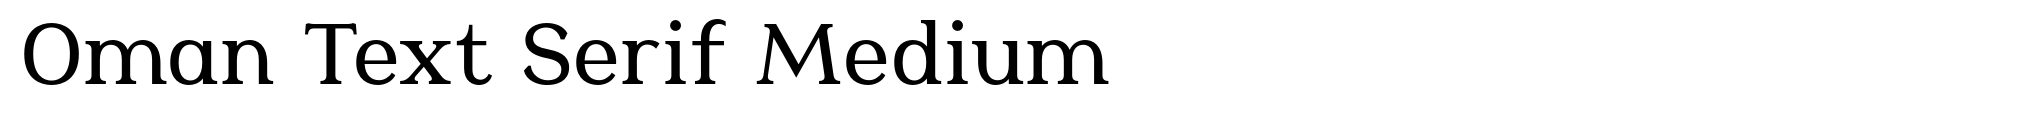 Oman Text Serif Medium image